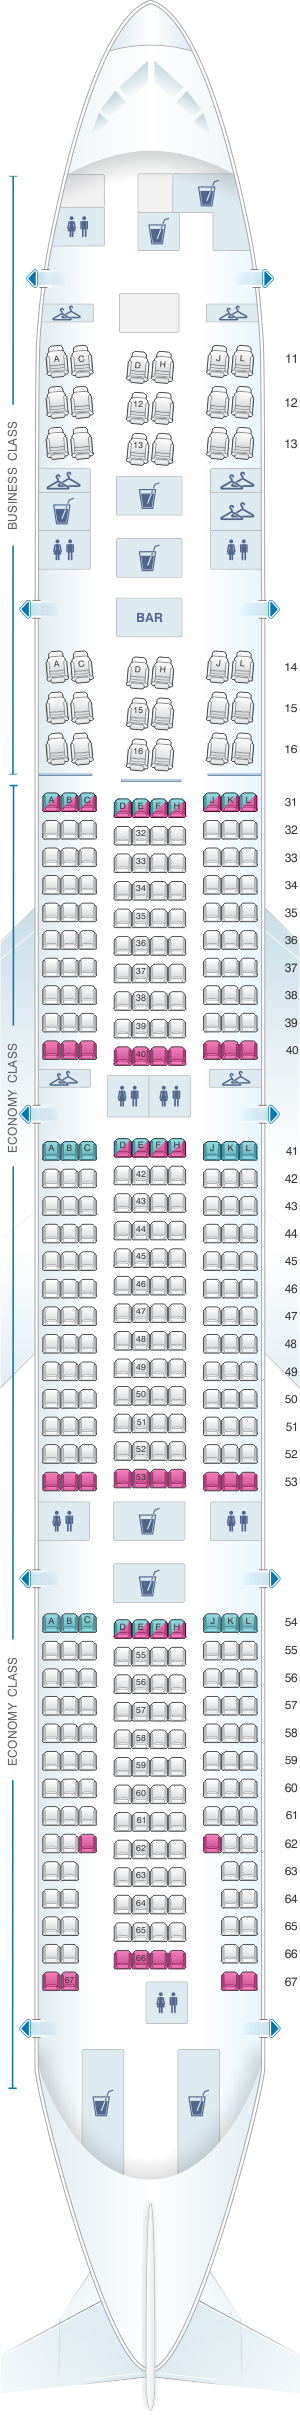 air china boeing 777 300 max seating